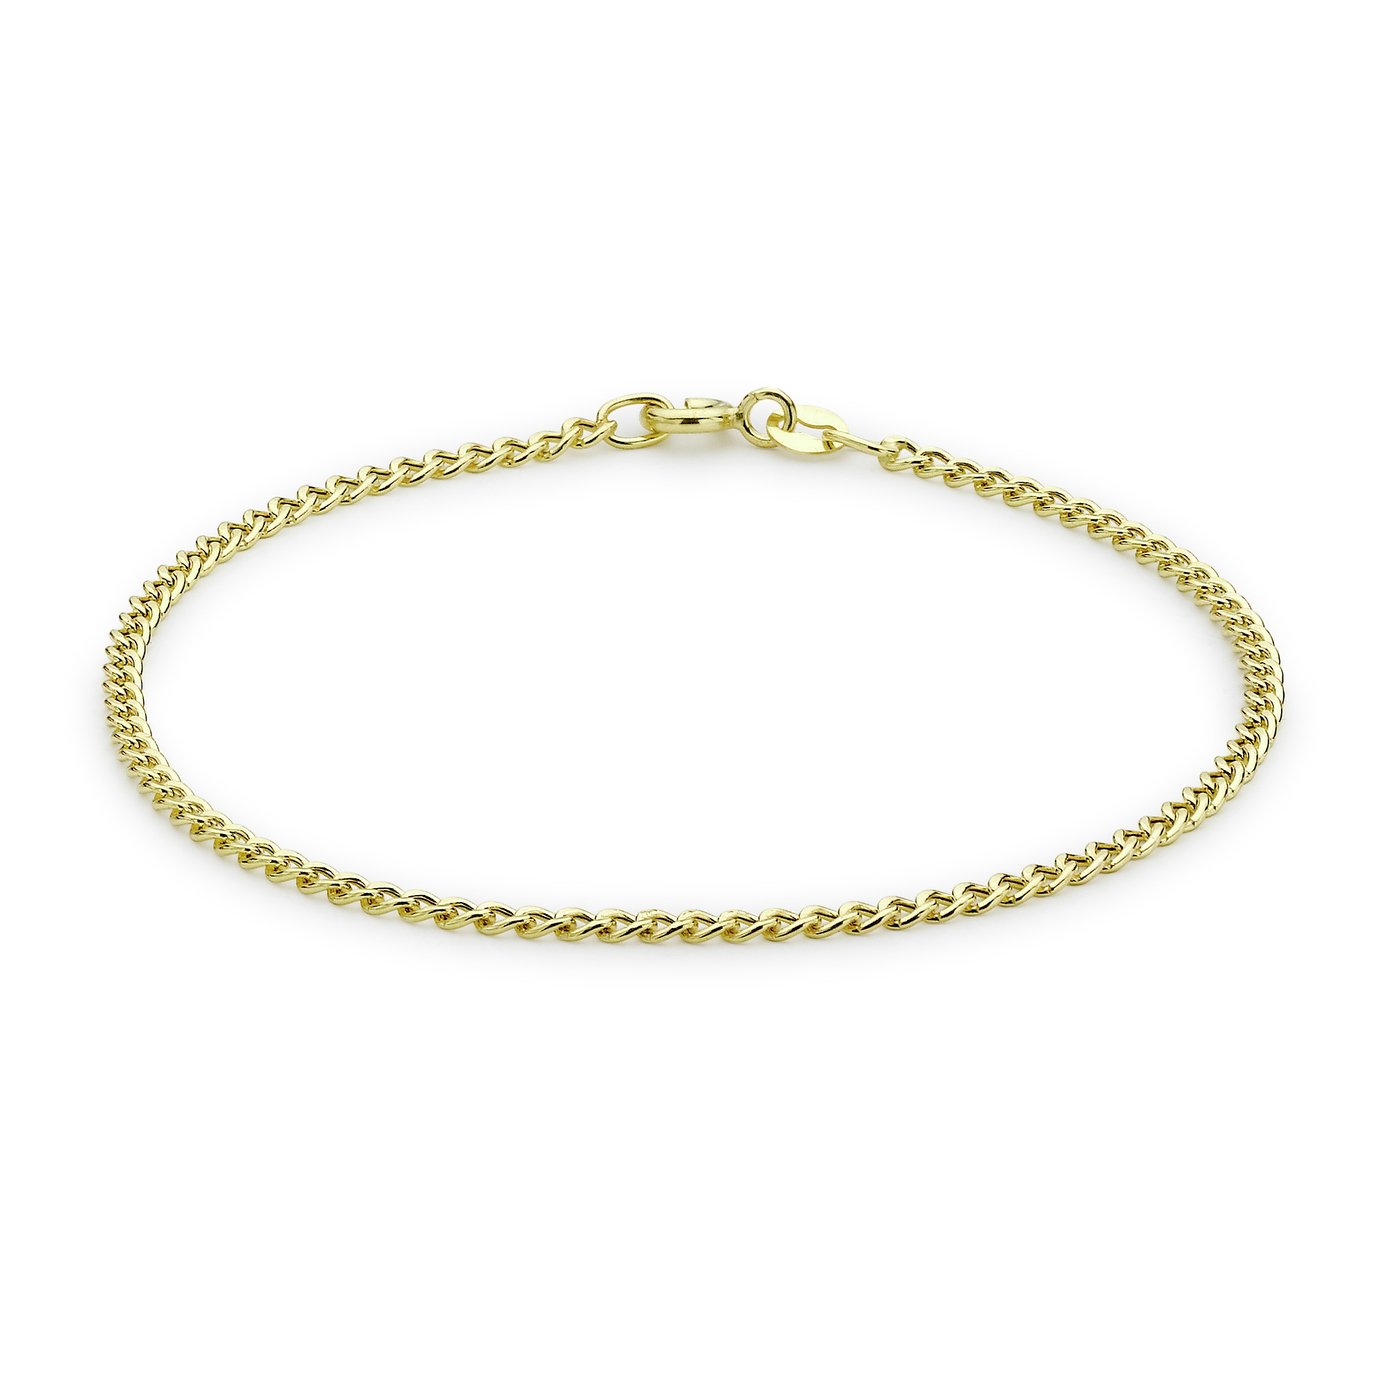 Revere 9ct Gold Classic Hollow Curb Chain Bracelet